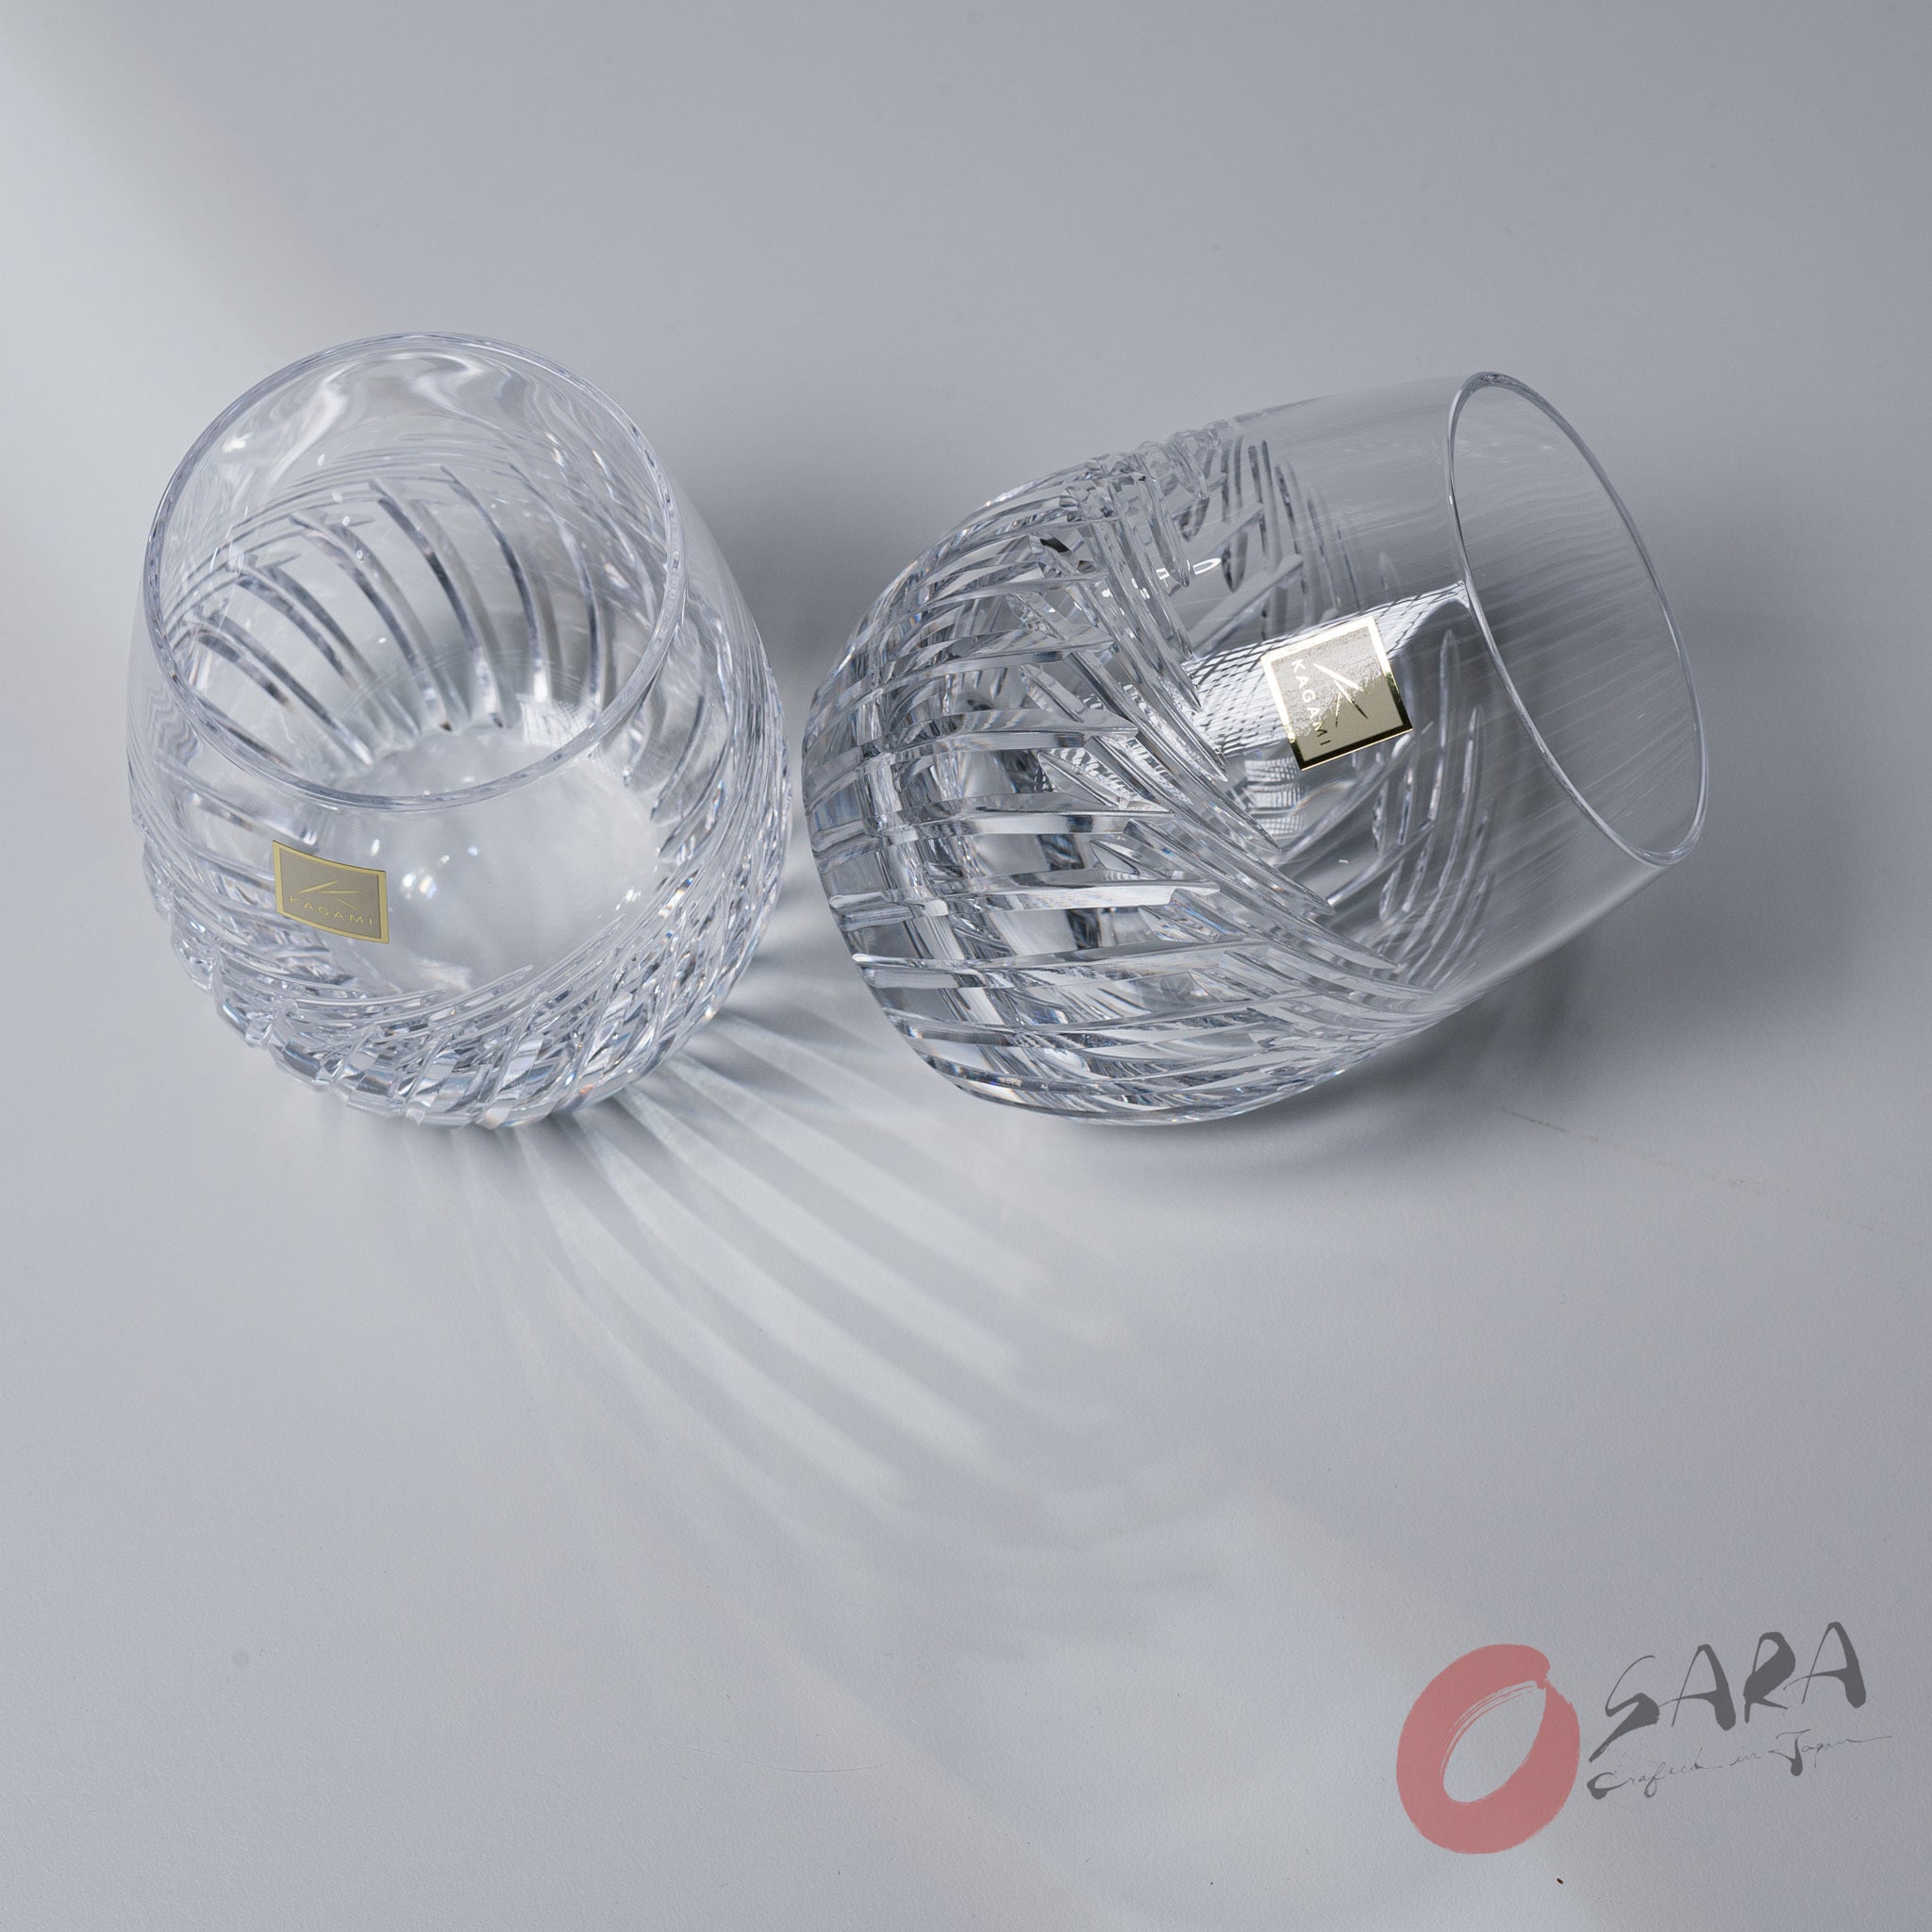 KAGAMI Crystal Japanese Handmade Pair Rock Glass - 250ml